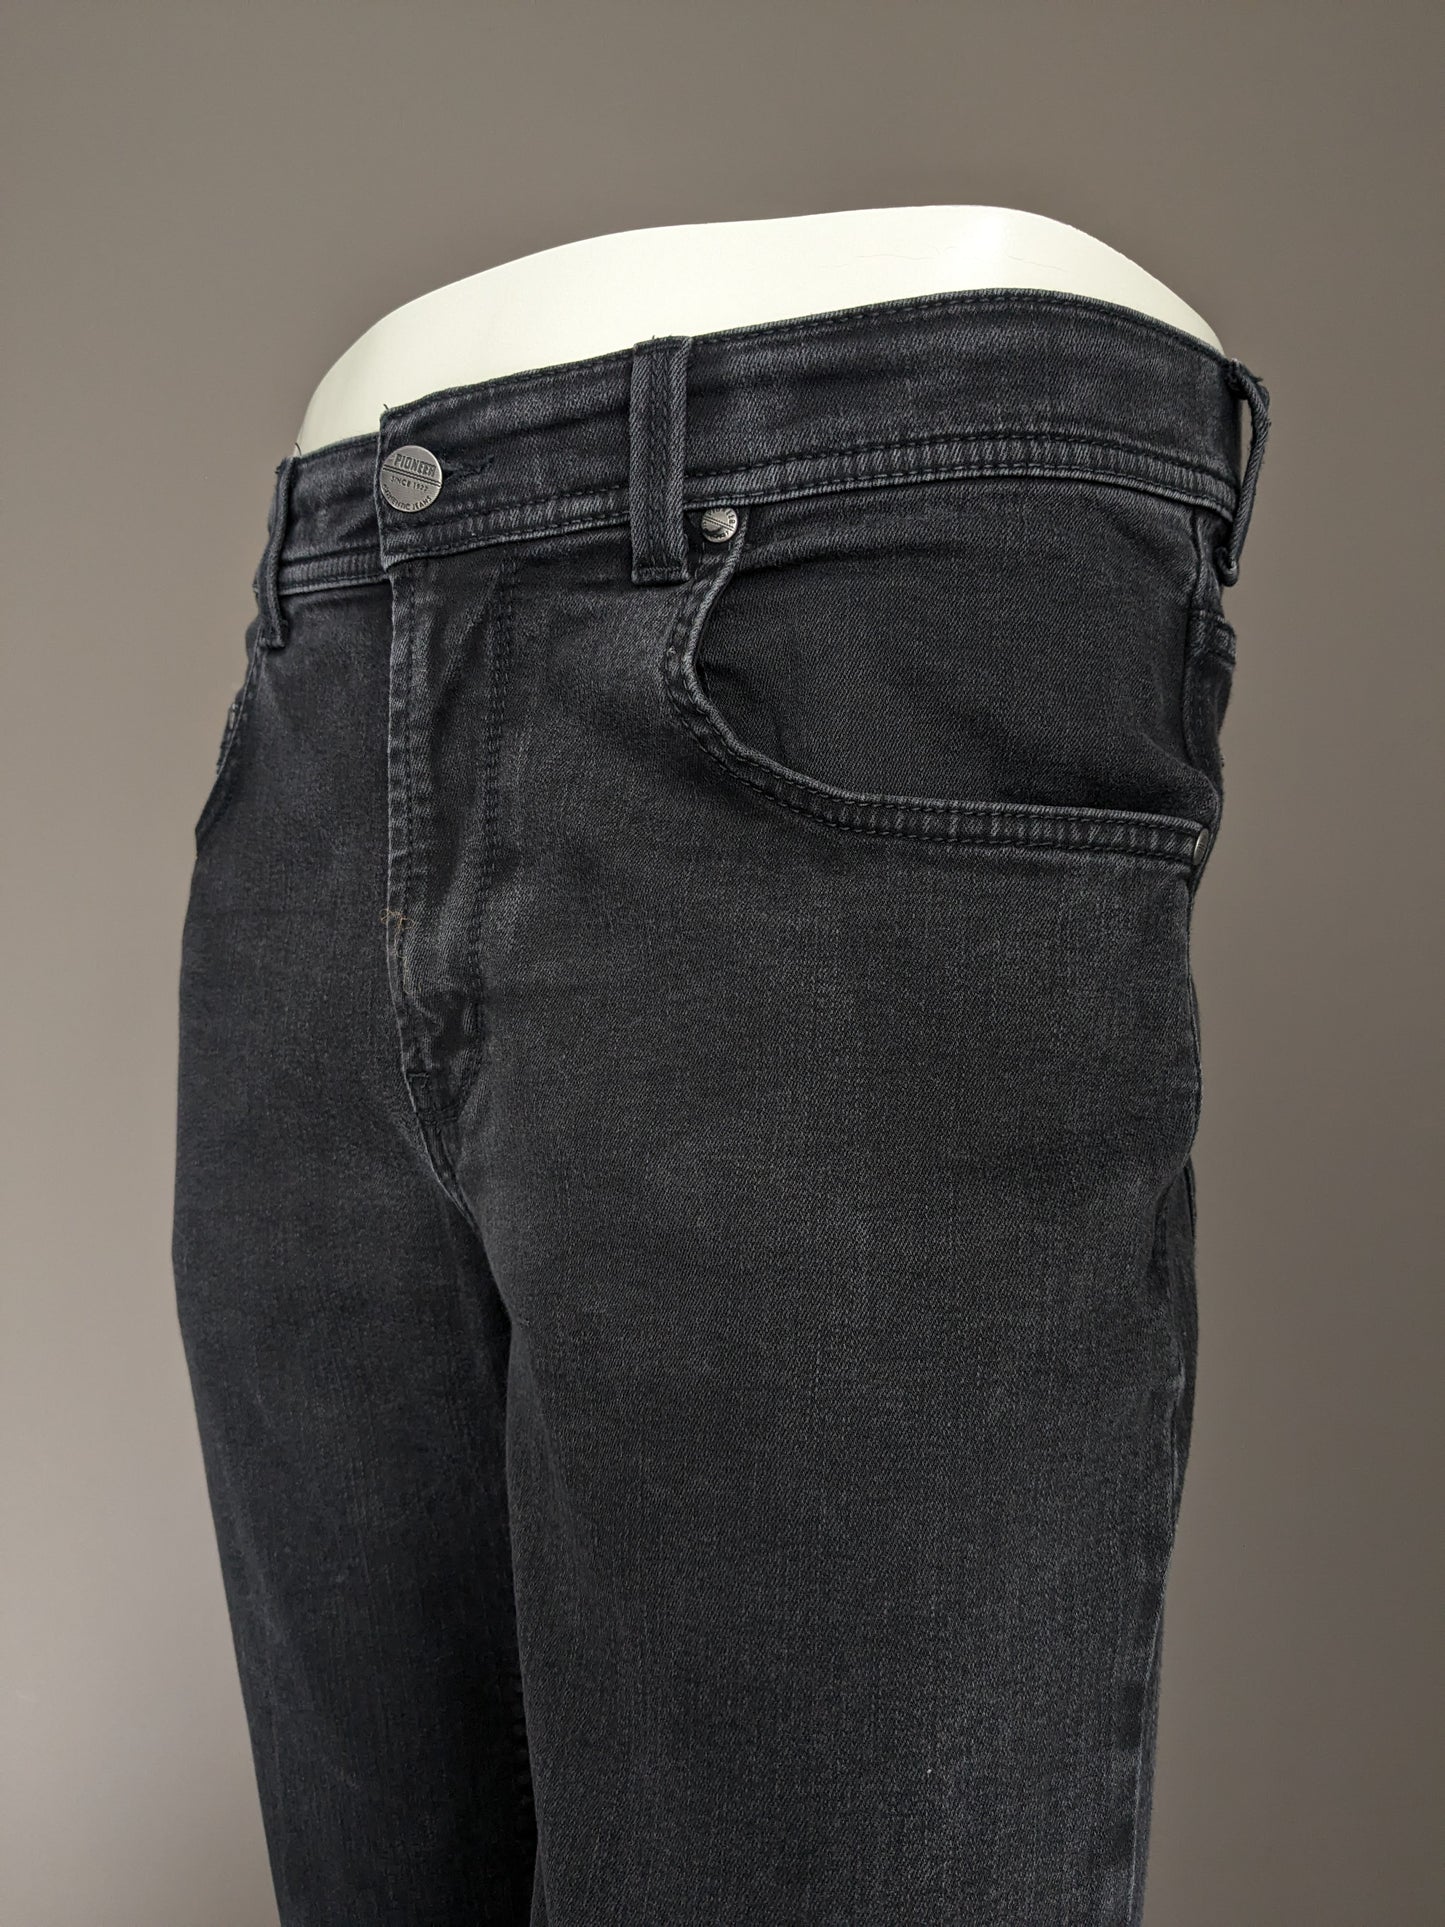 Pioneer jeans. Black colored. Type Rando. Megaflex. Size W33 - L30. (shortened)